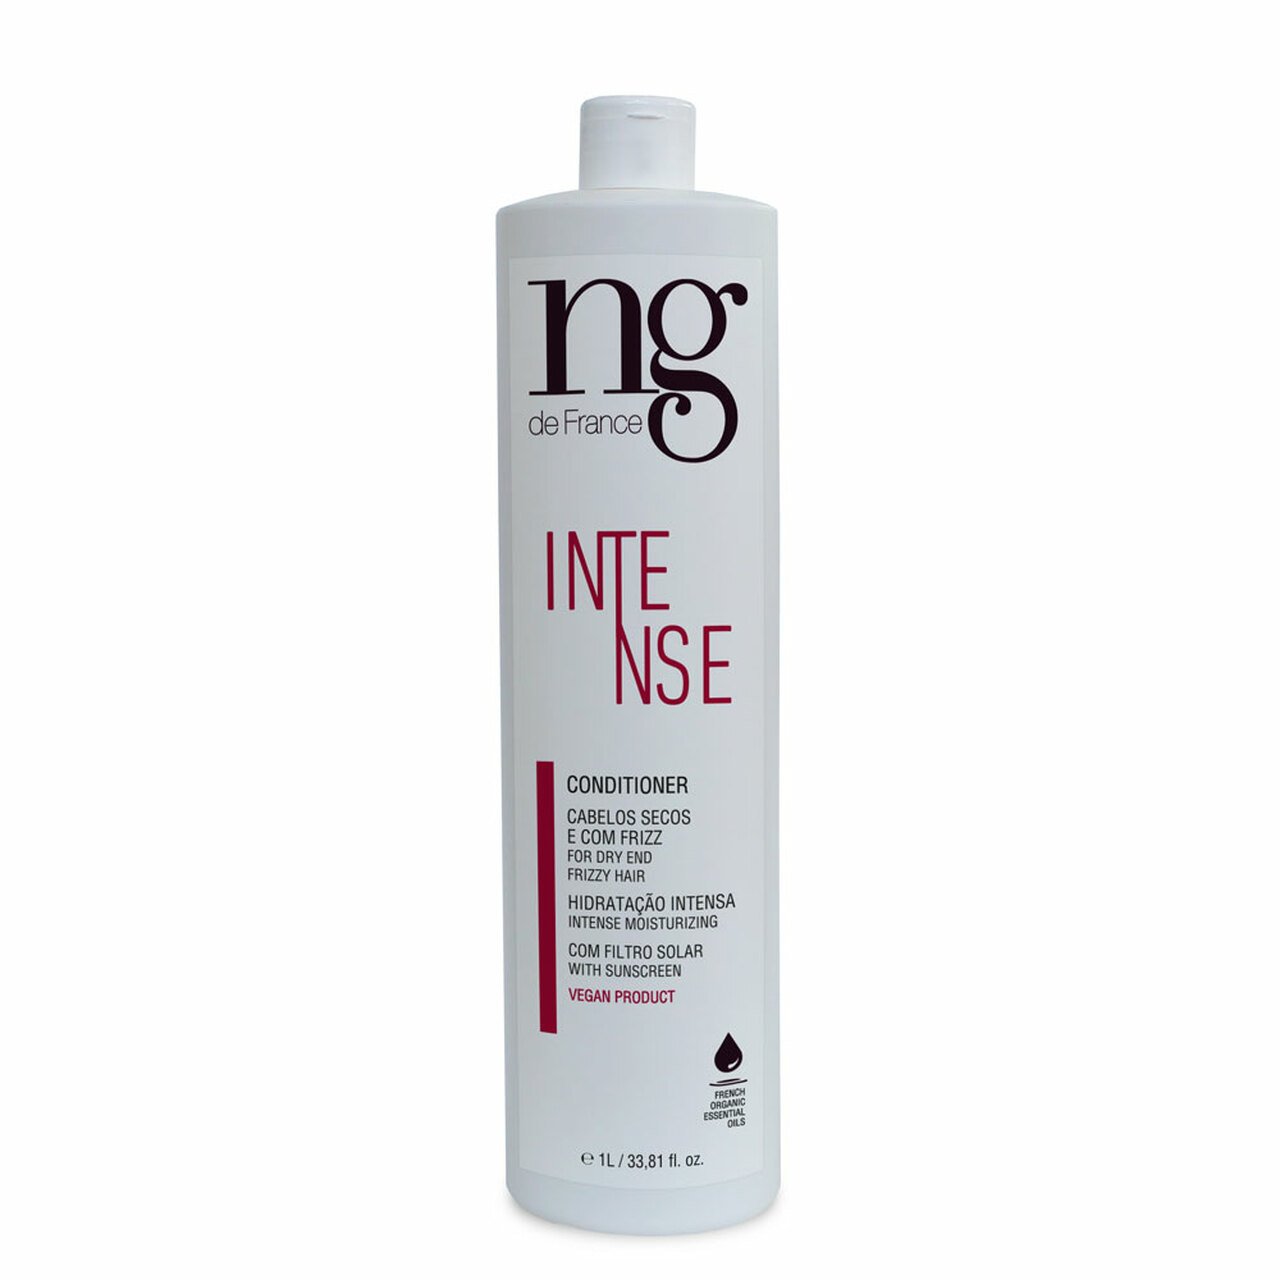 NG de France Hair Care Intense Conditioner 1000ML - NG de France